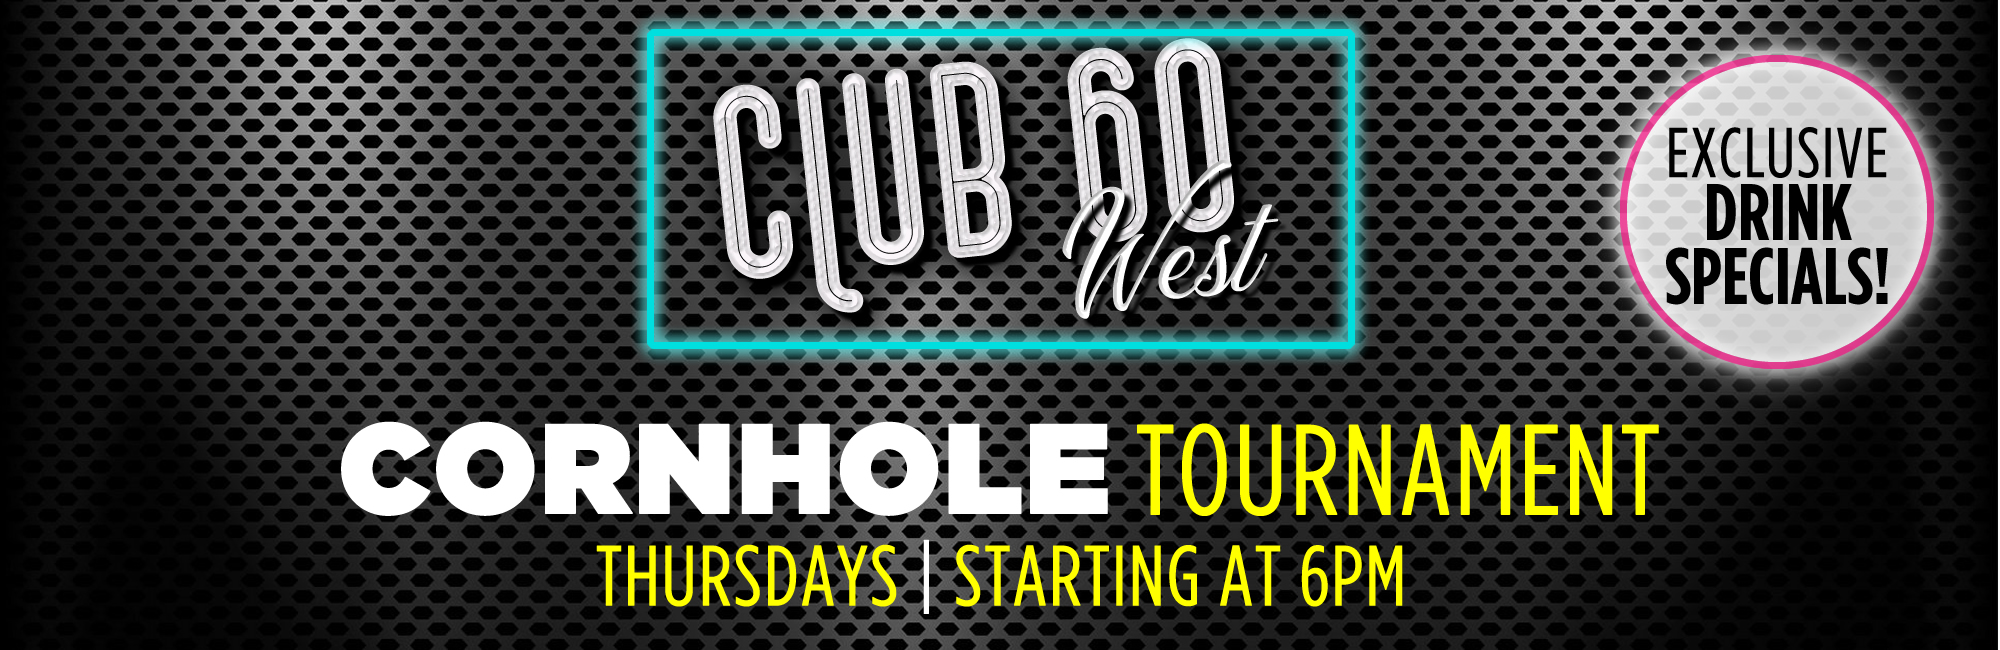 Club 60 West Thursdays